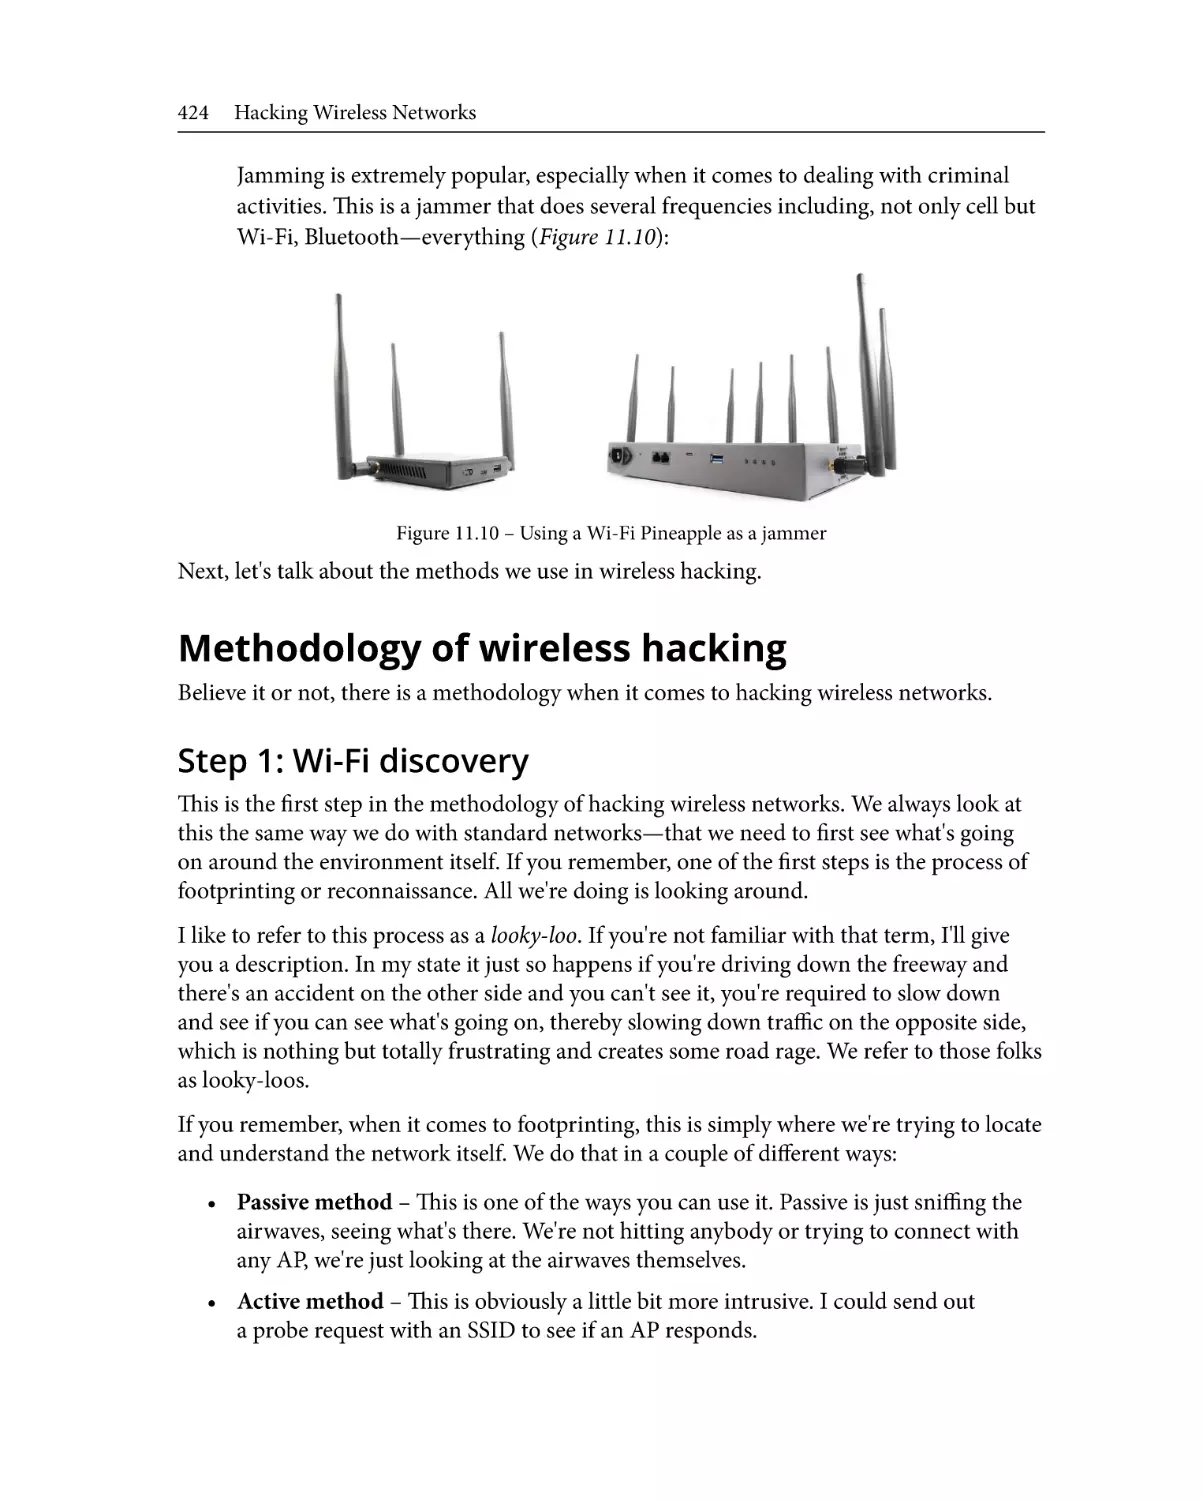 Methodology of wireless hacking
Step 1